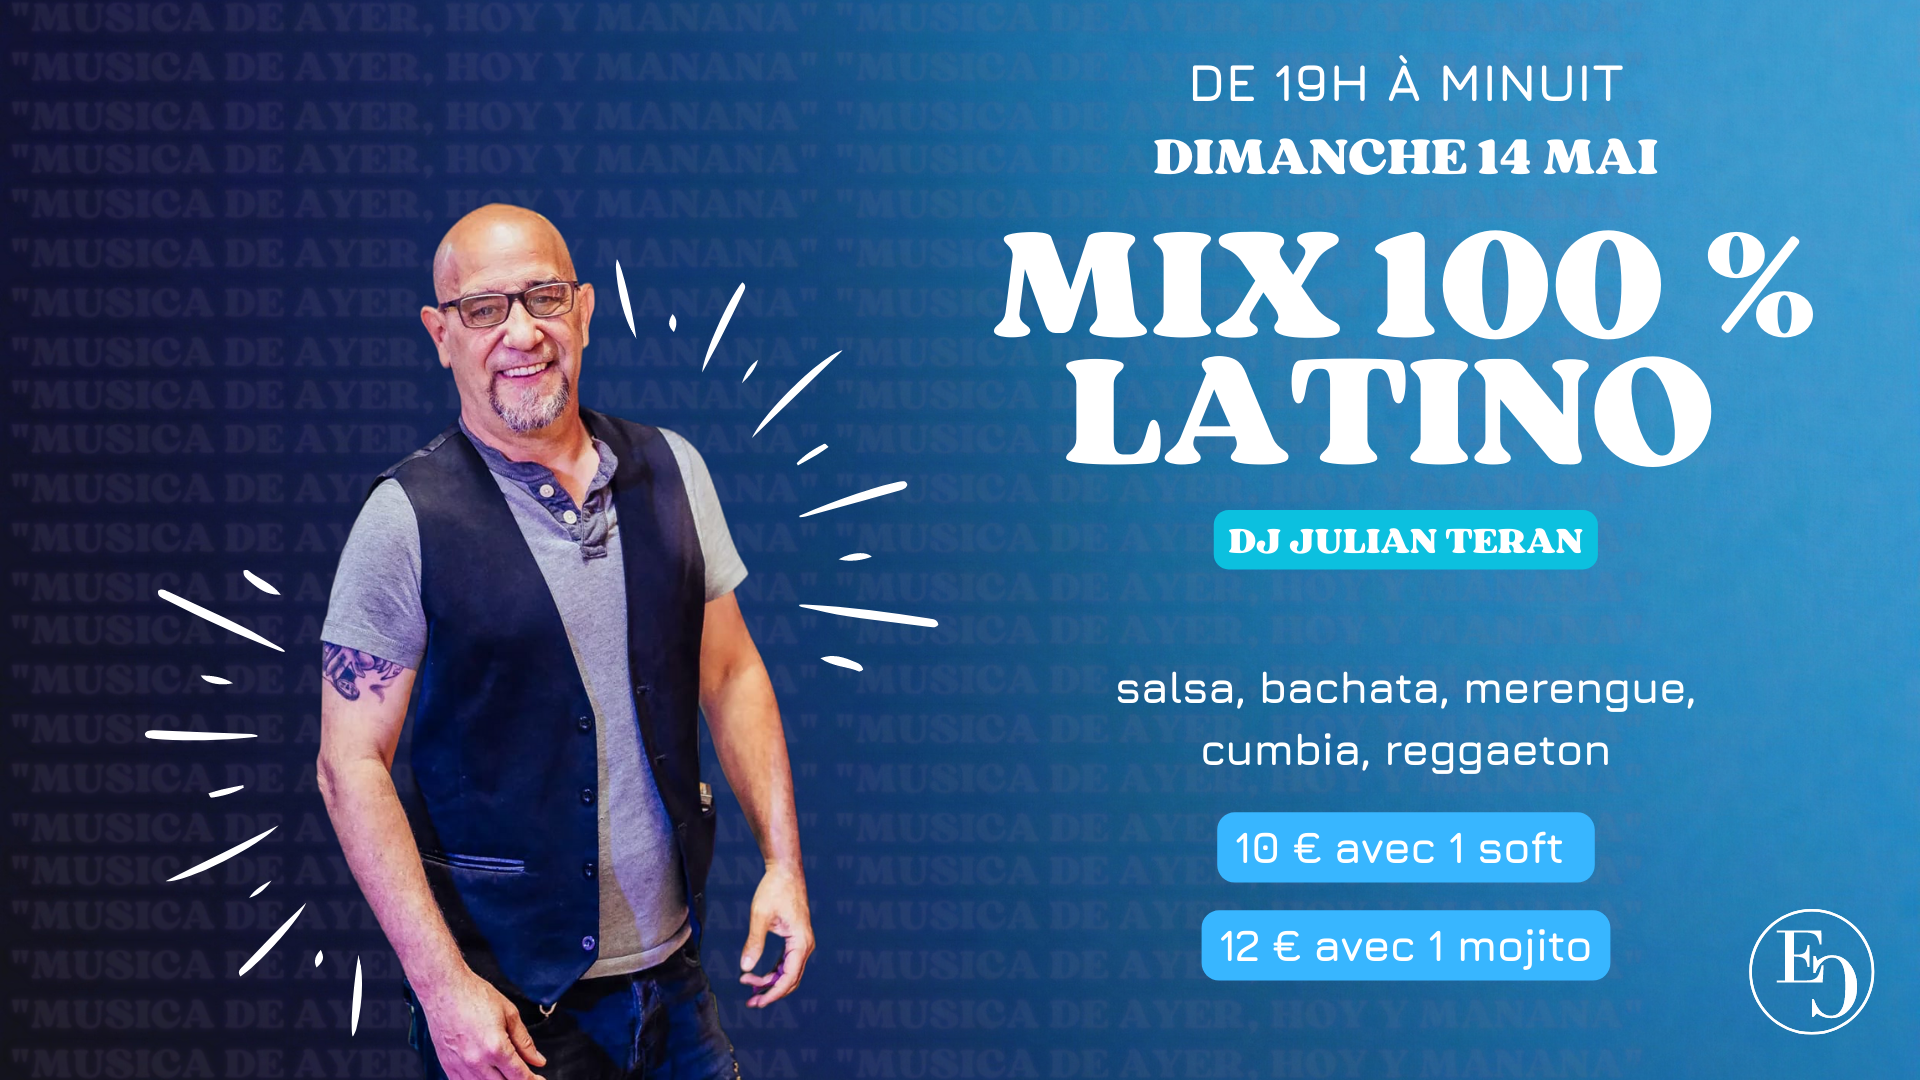 MIX 100% LATINO - DJ JULIAN TERAN